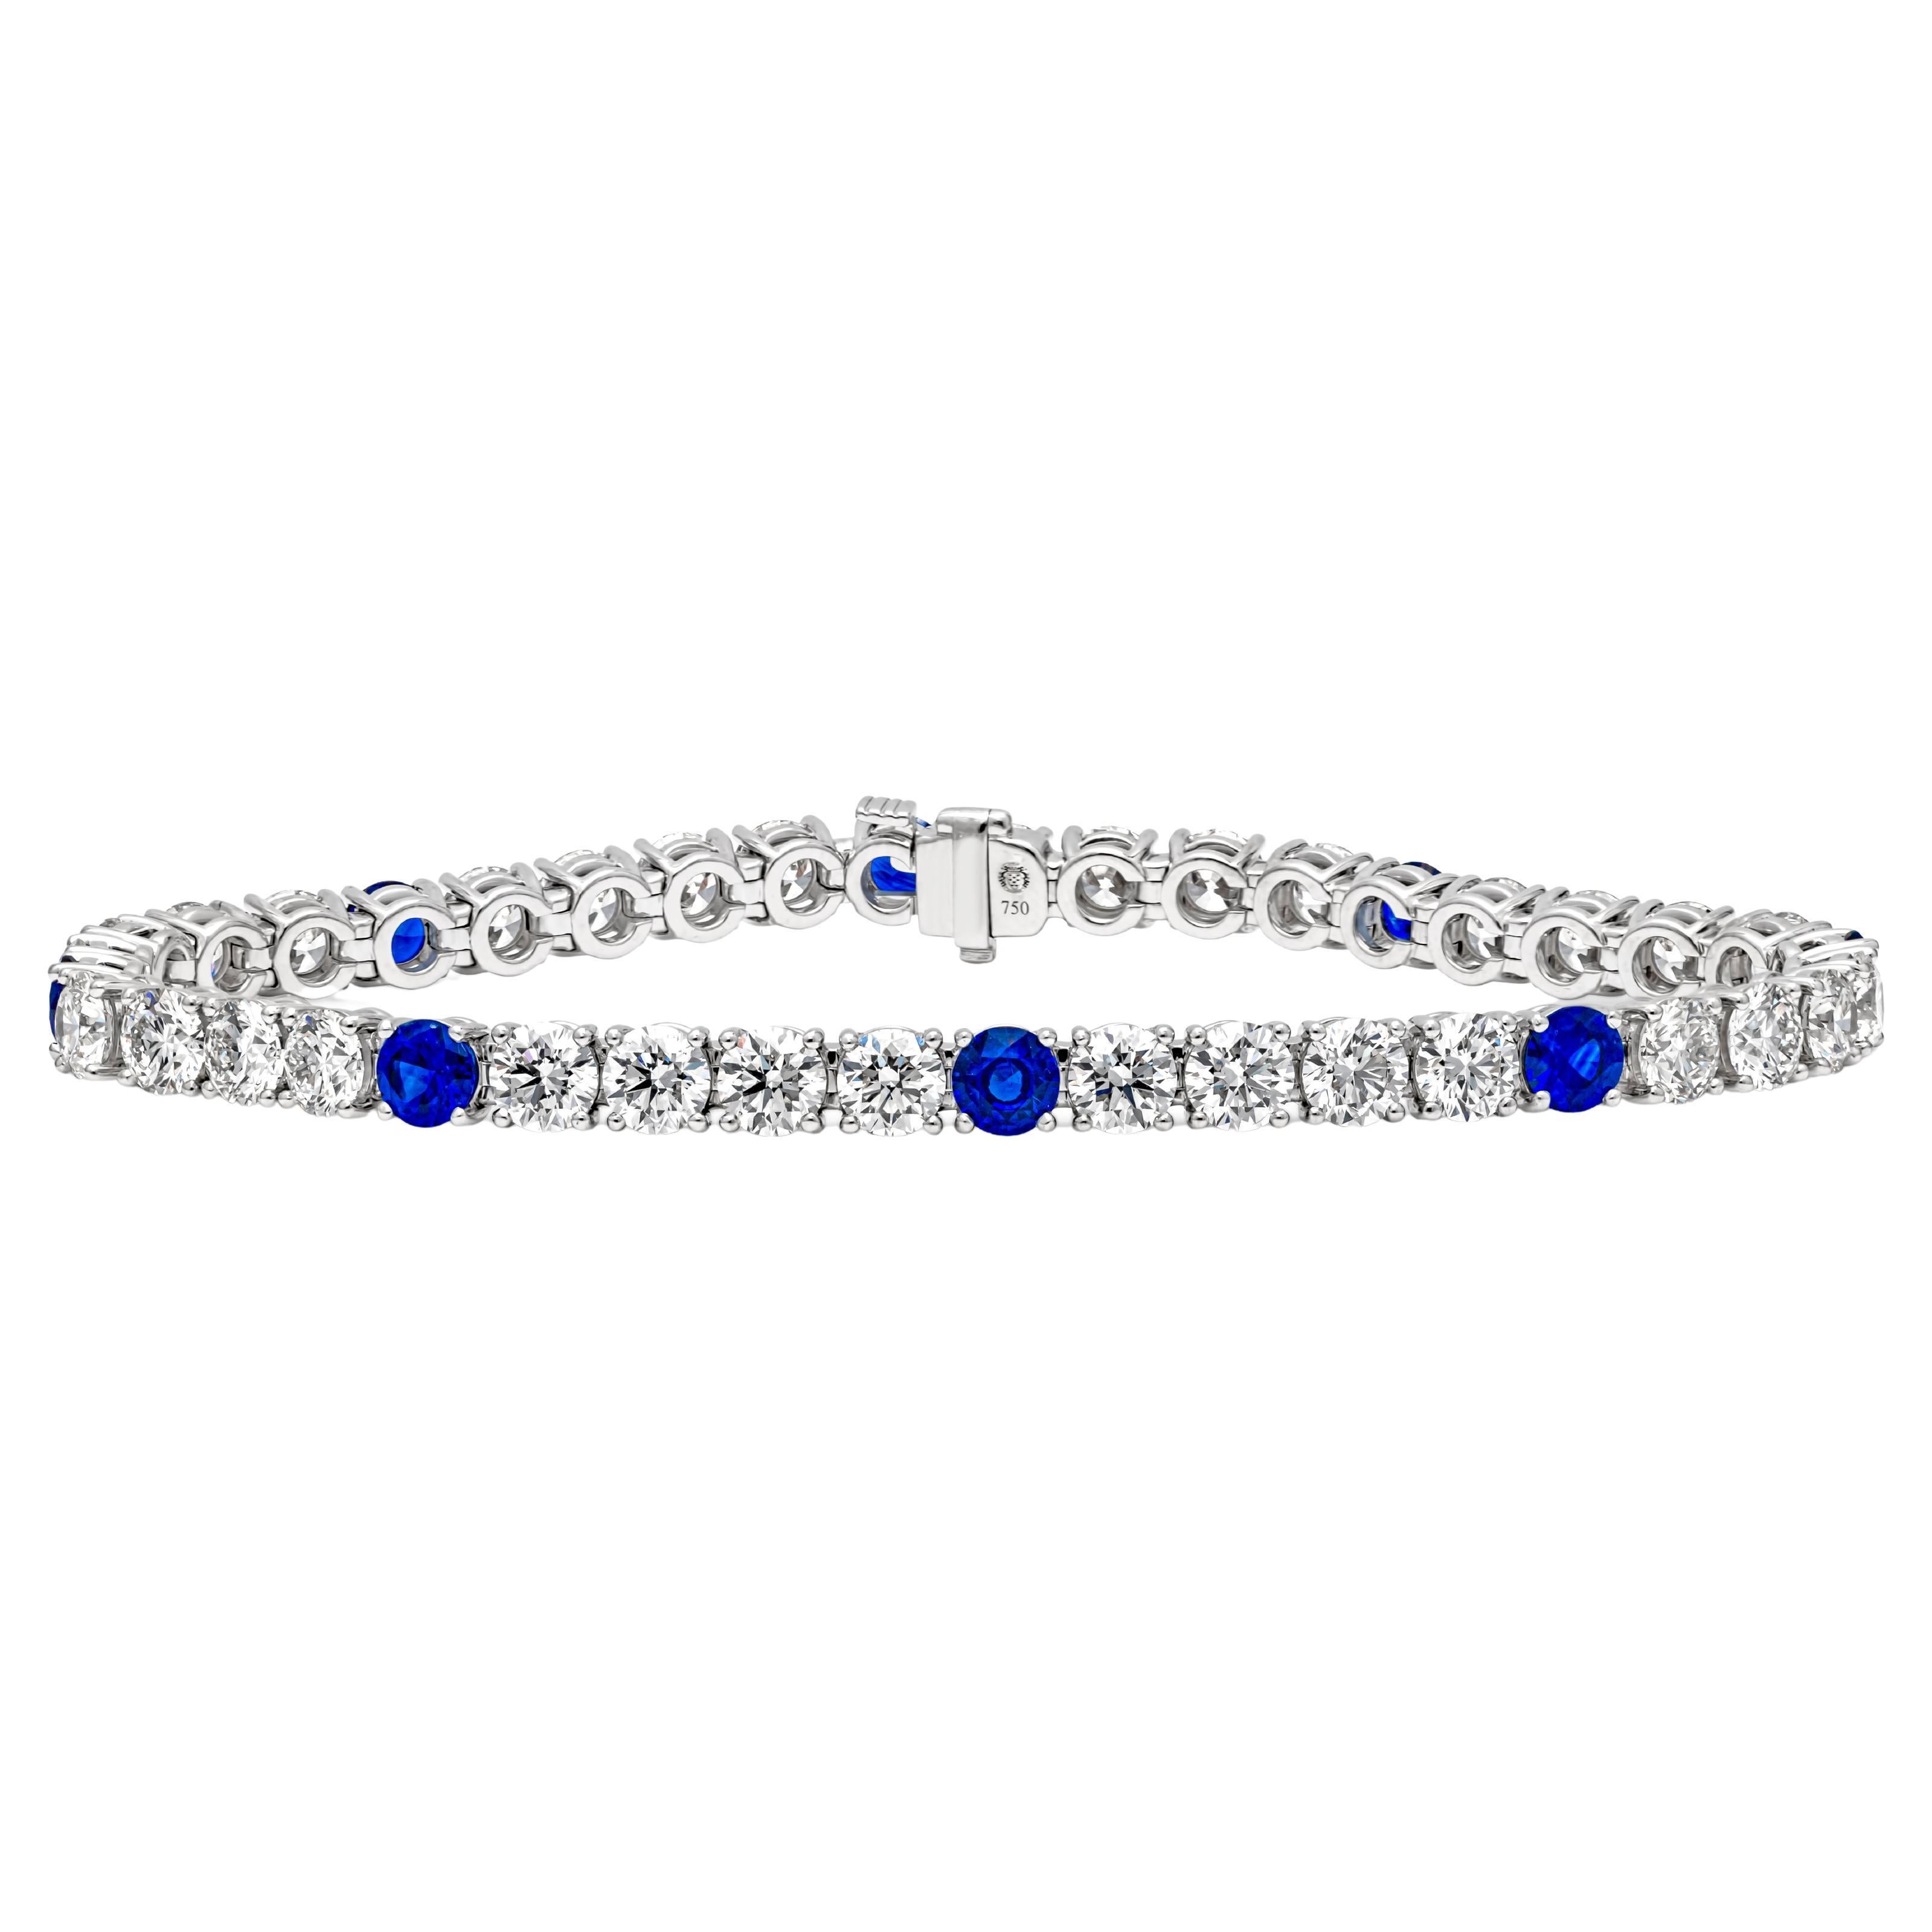 Roman Malakov 16.48 Carats Total Round Blue Sapphire & Diamond Tennis Bracelet